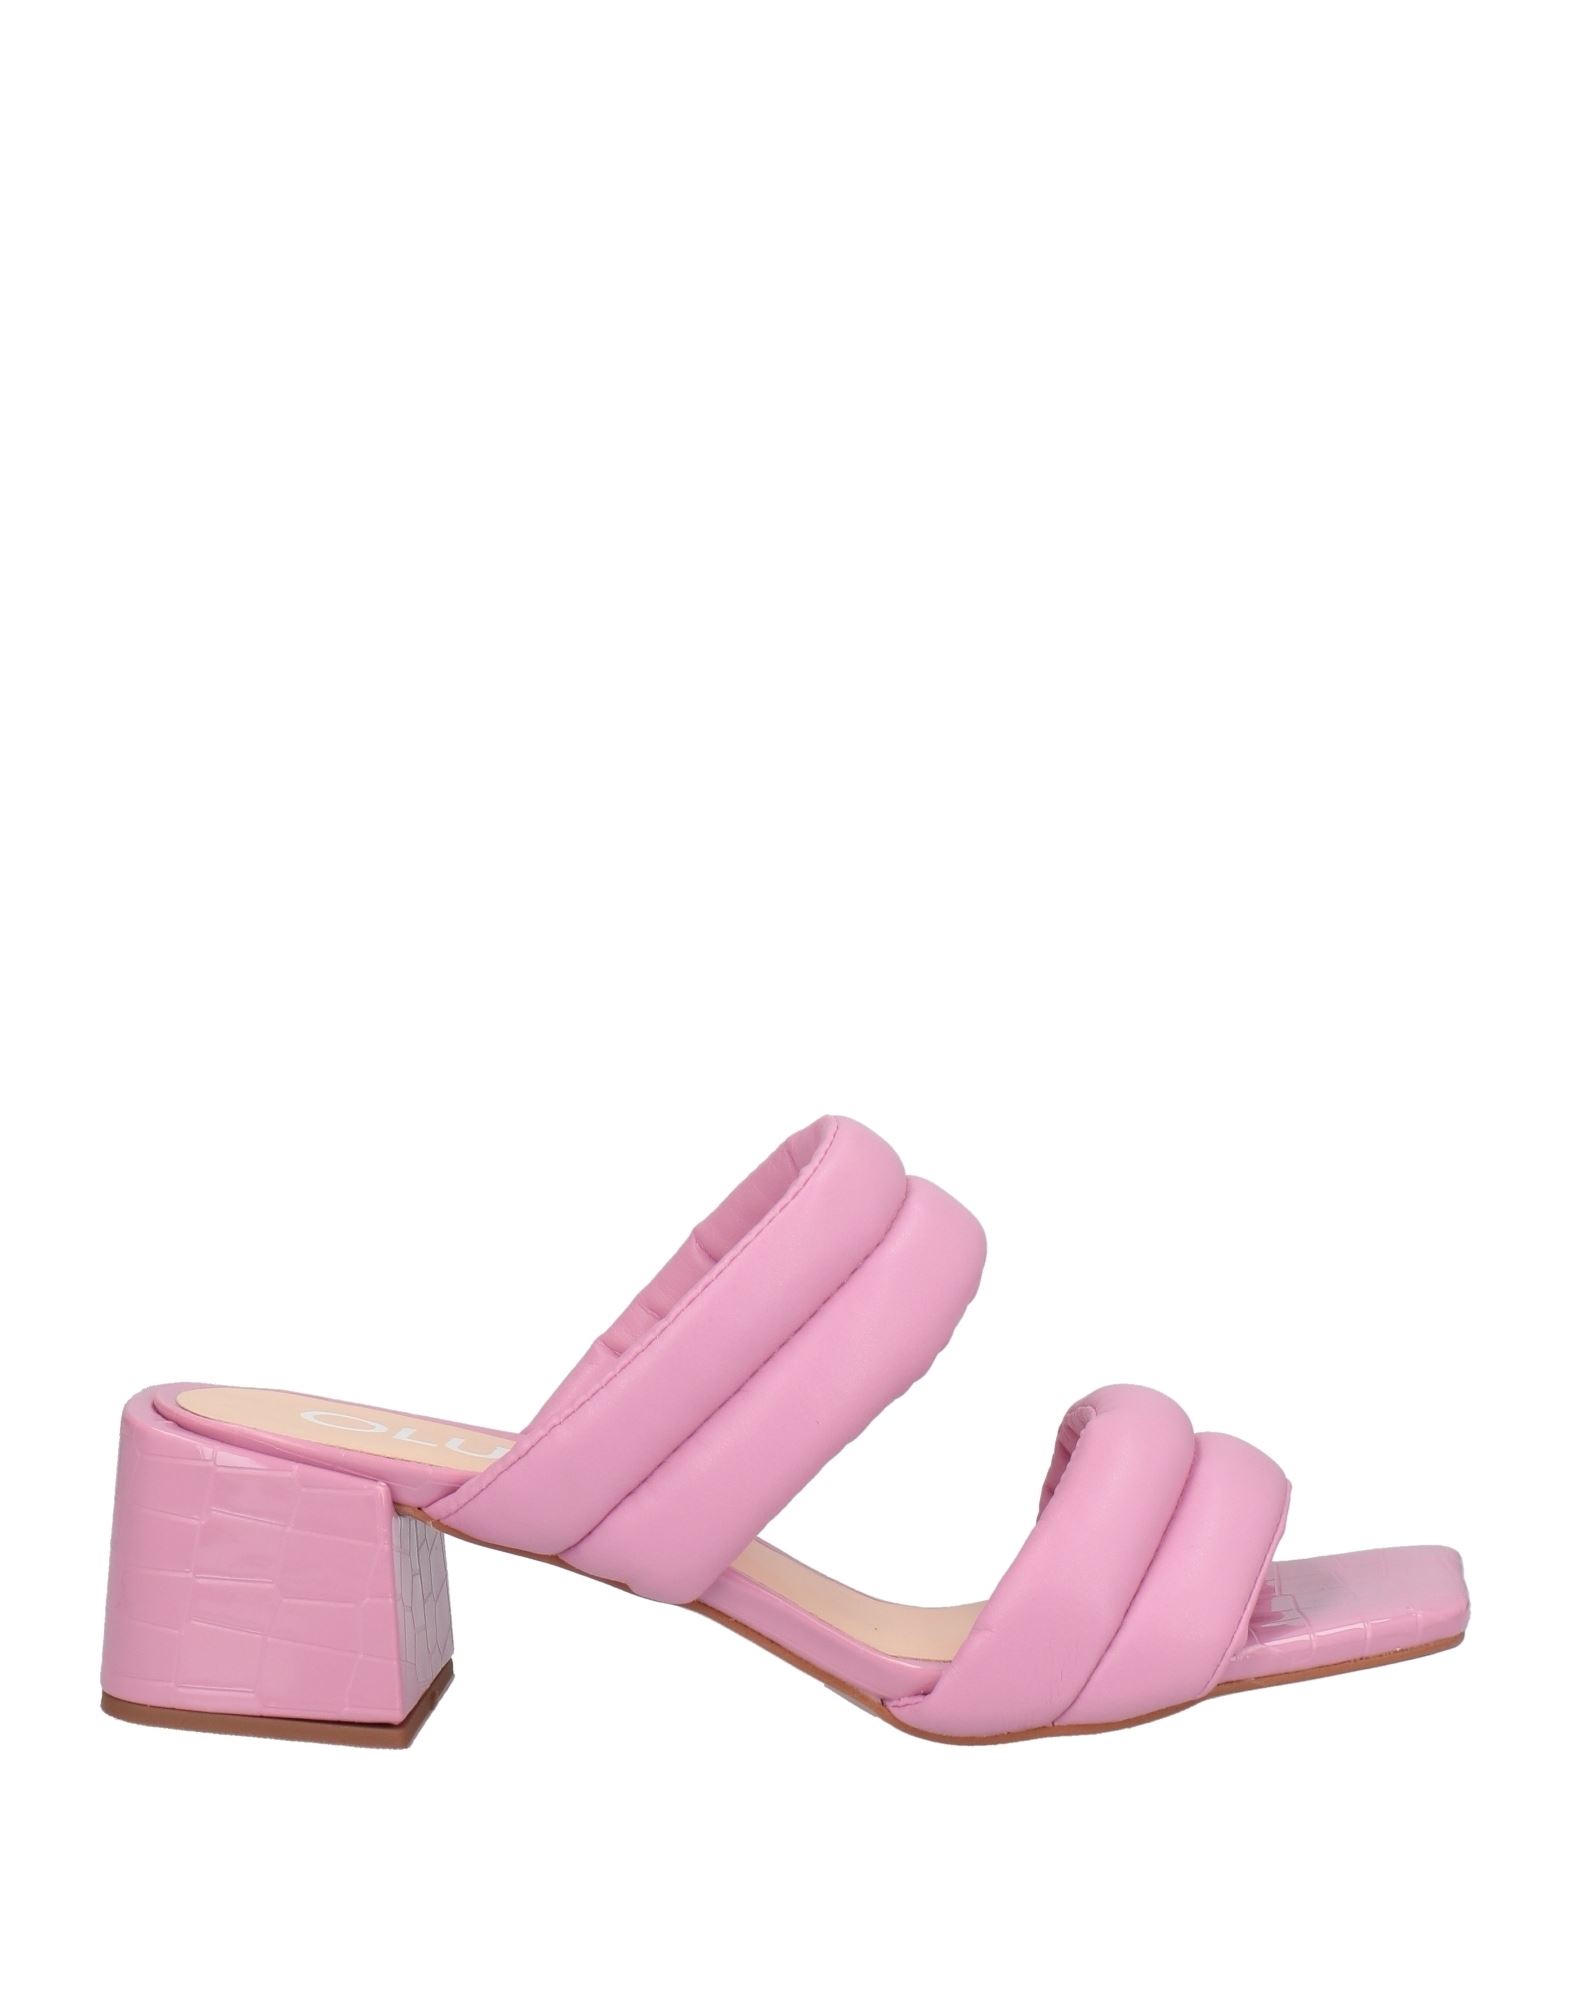 Olulu Sandals In Pink